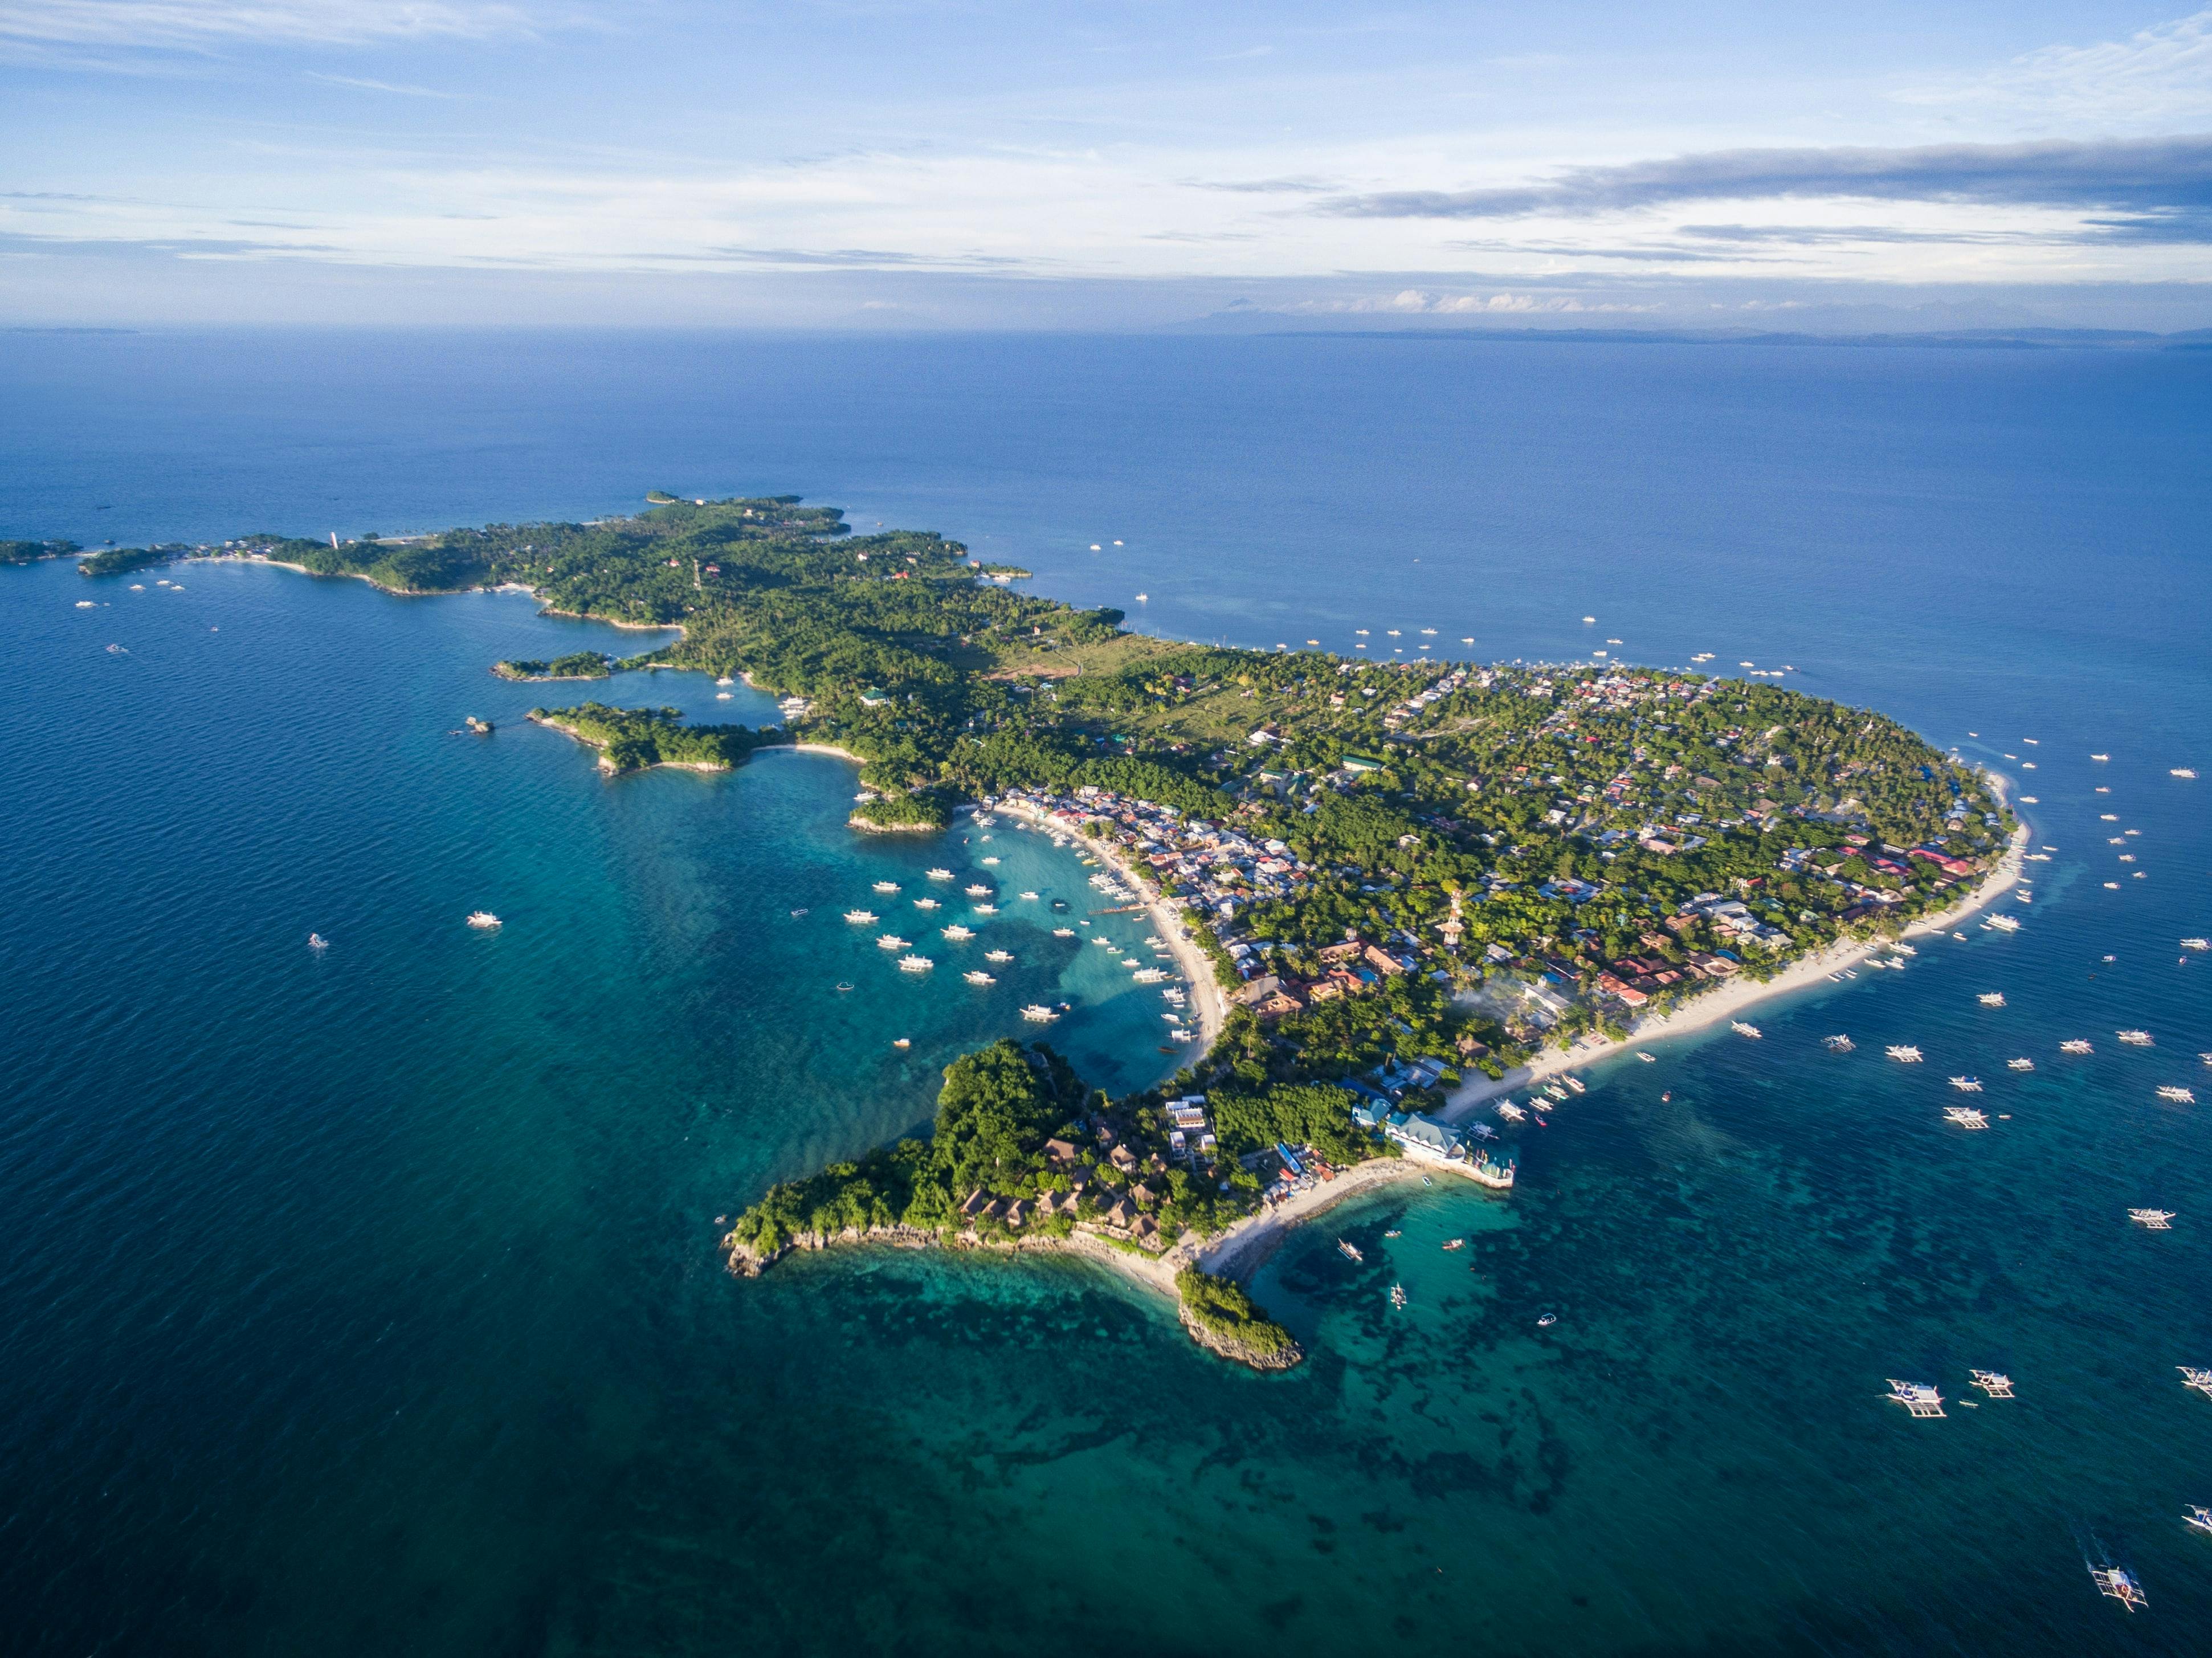 Aerial view of Malapascua Island in Cebu